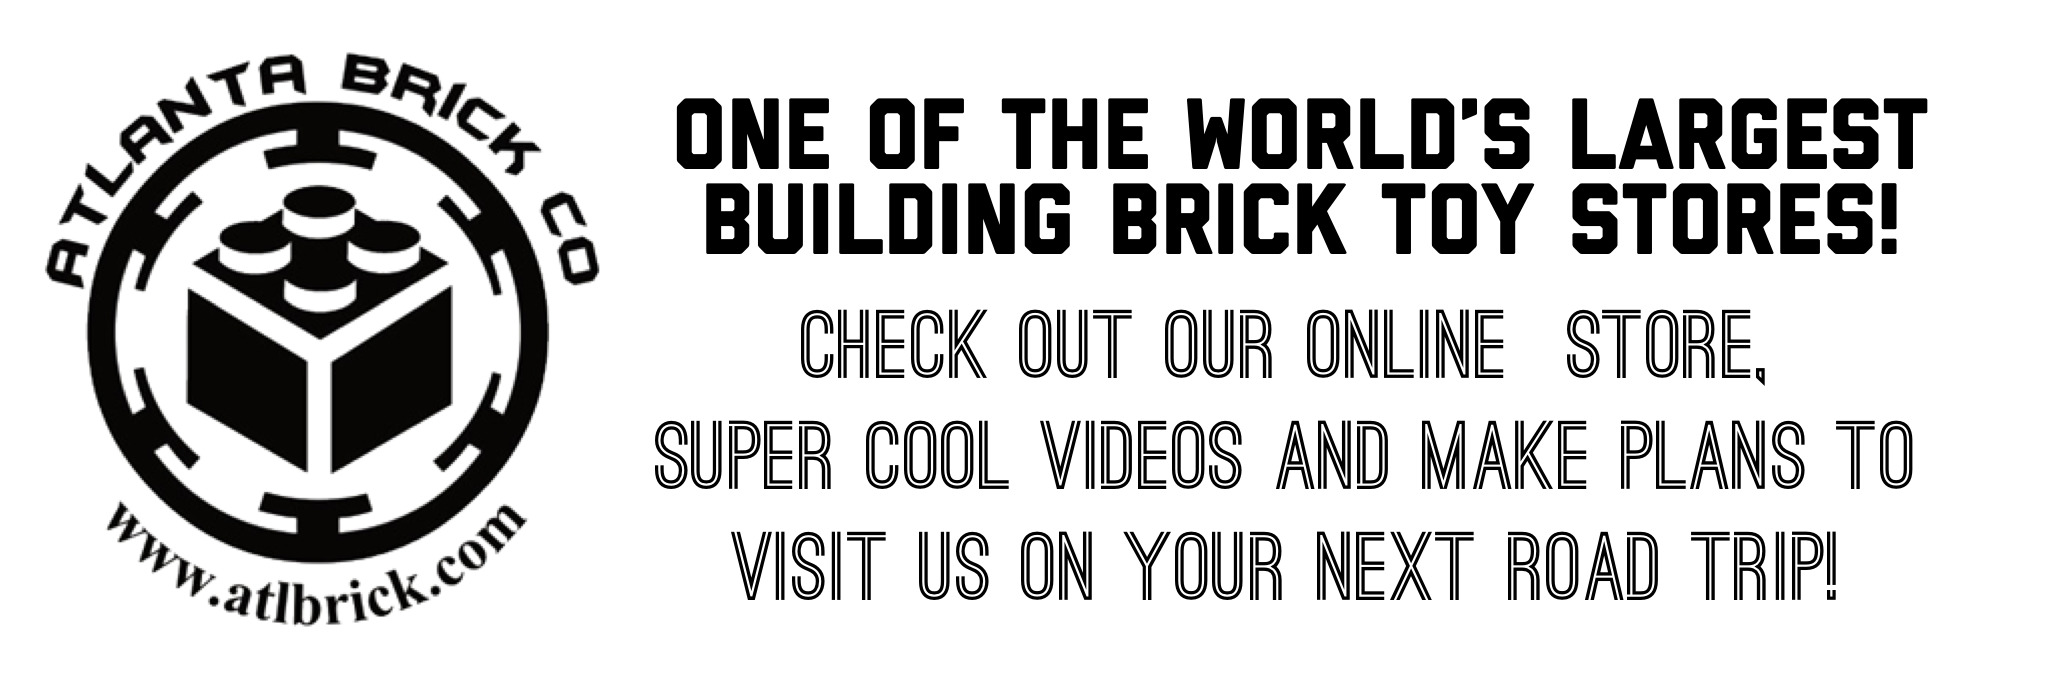 Atlanta Brick Co